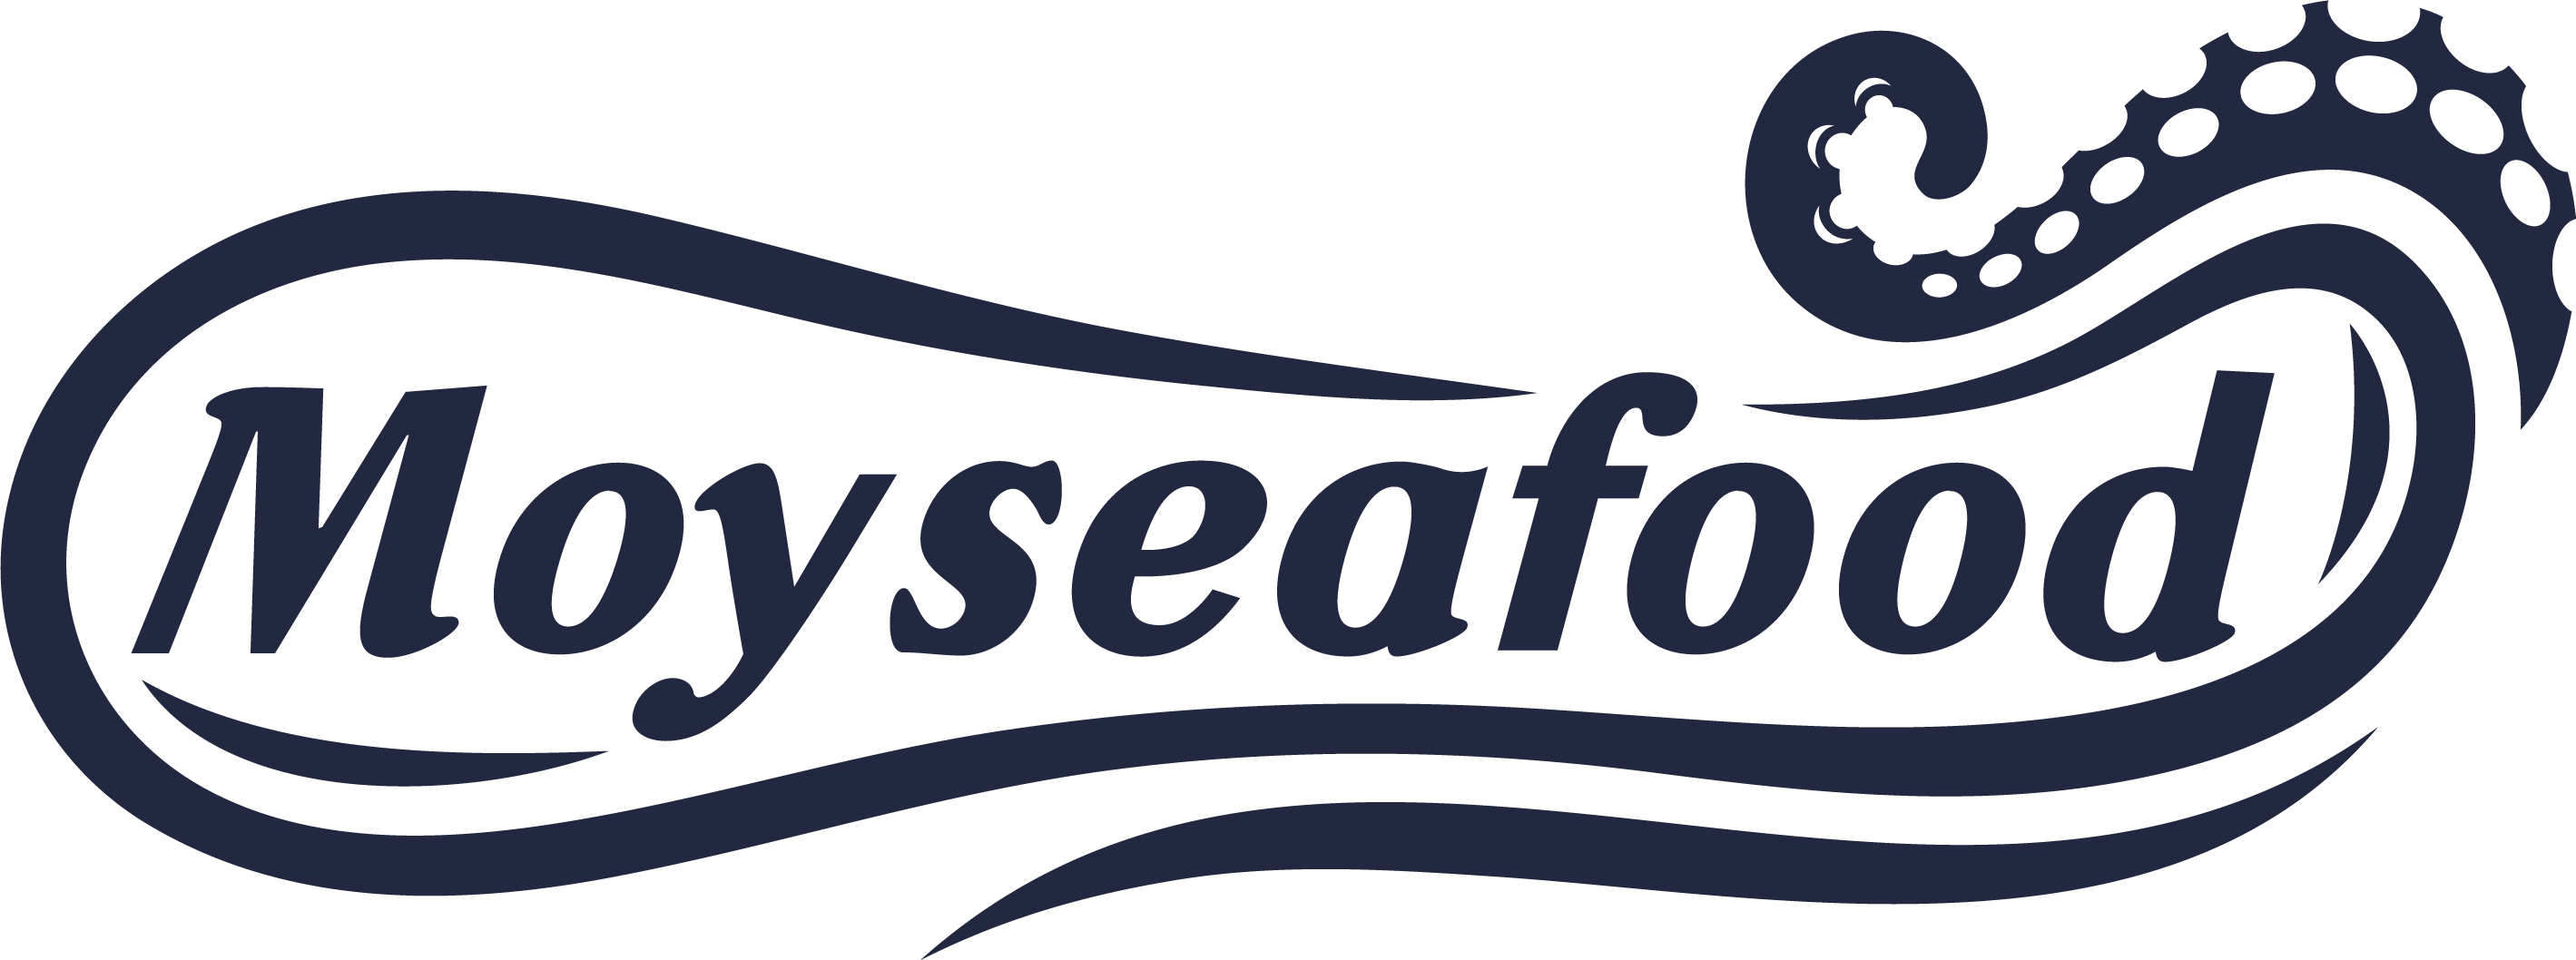 Moyseafood Logo